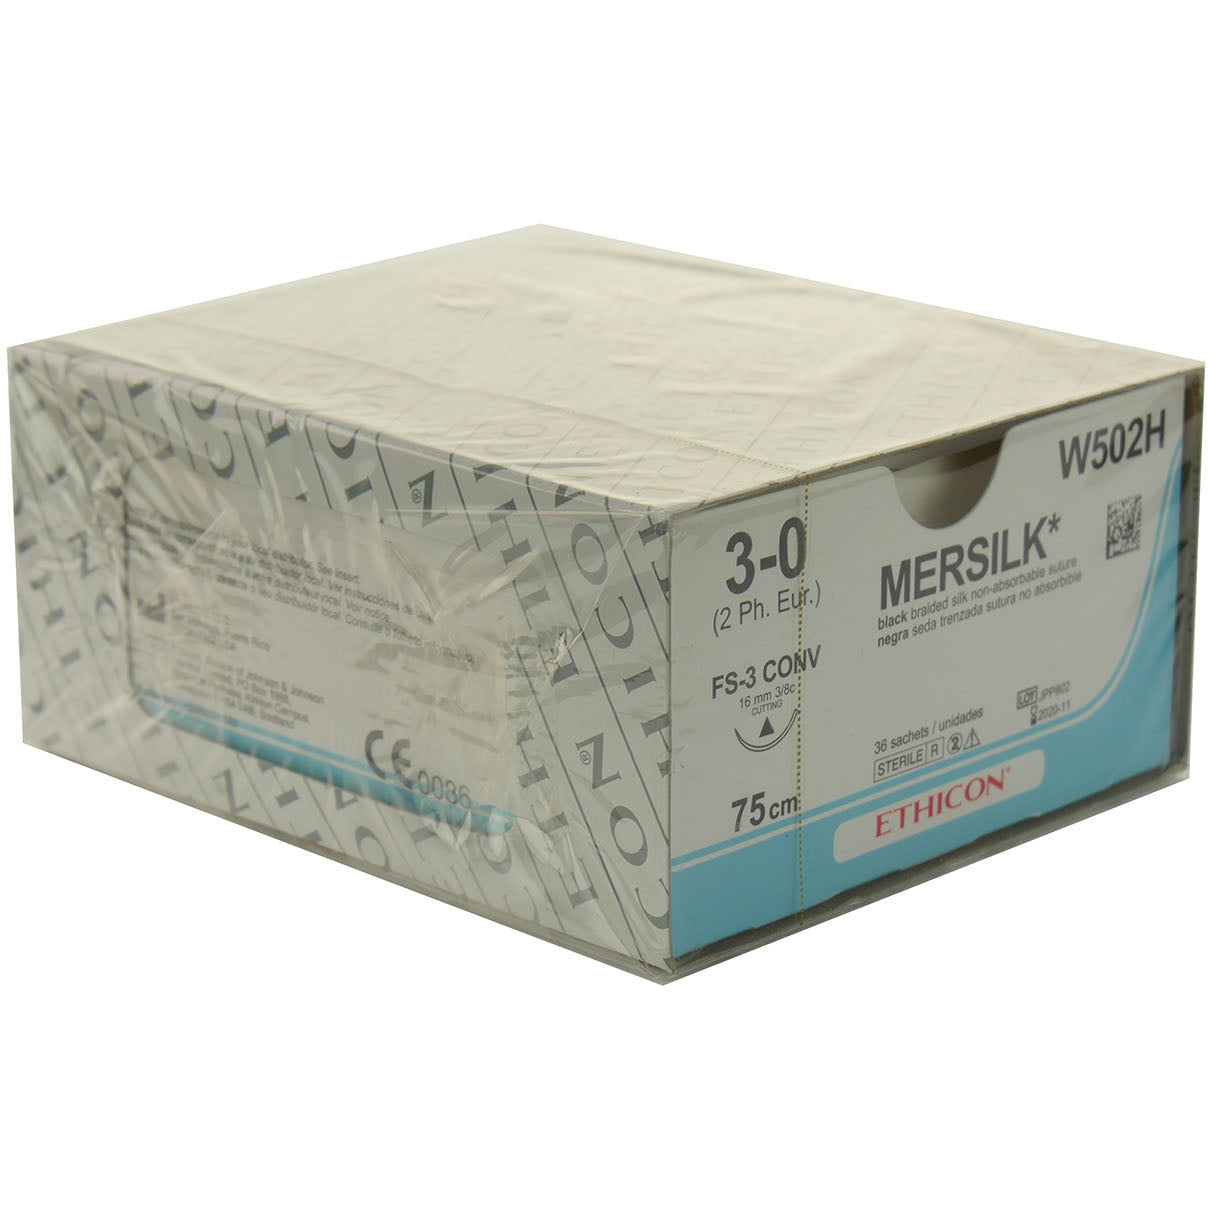 Mersilk Suture Cutting Needle: 16mm 75cm Black 3-0 2 x 36